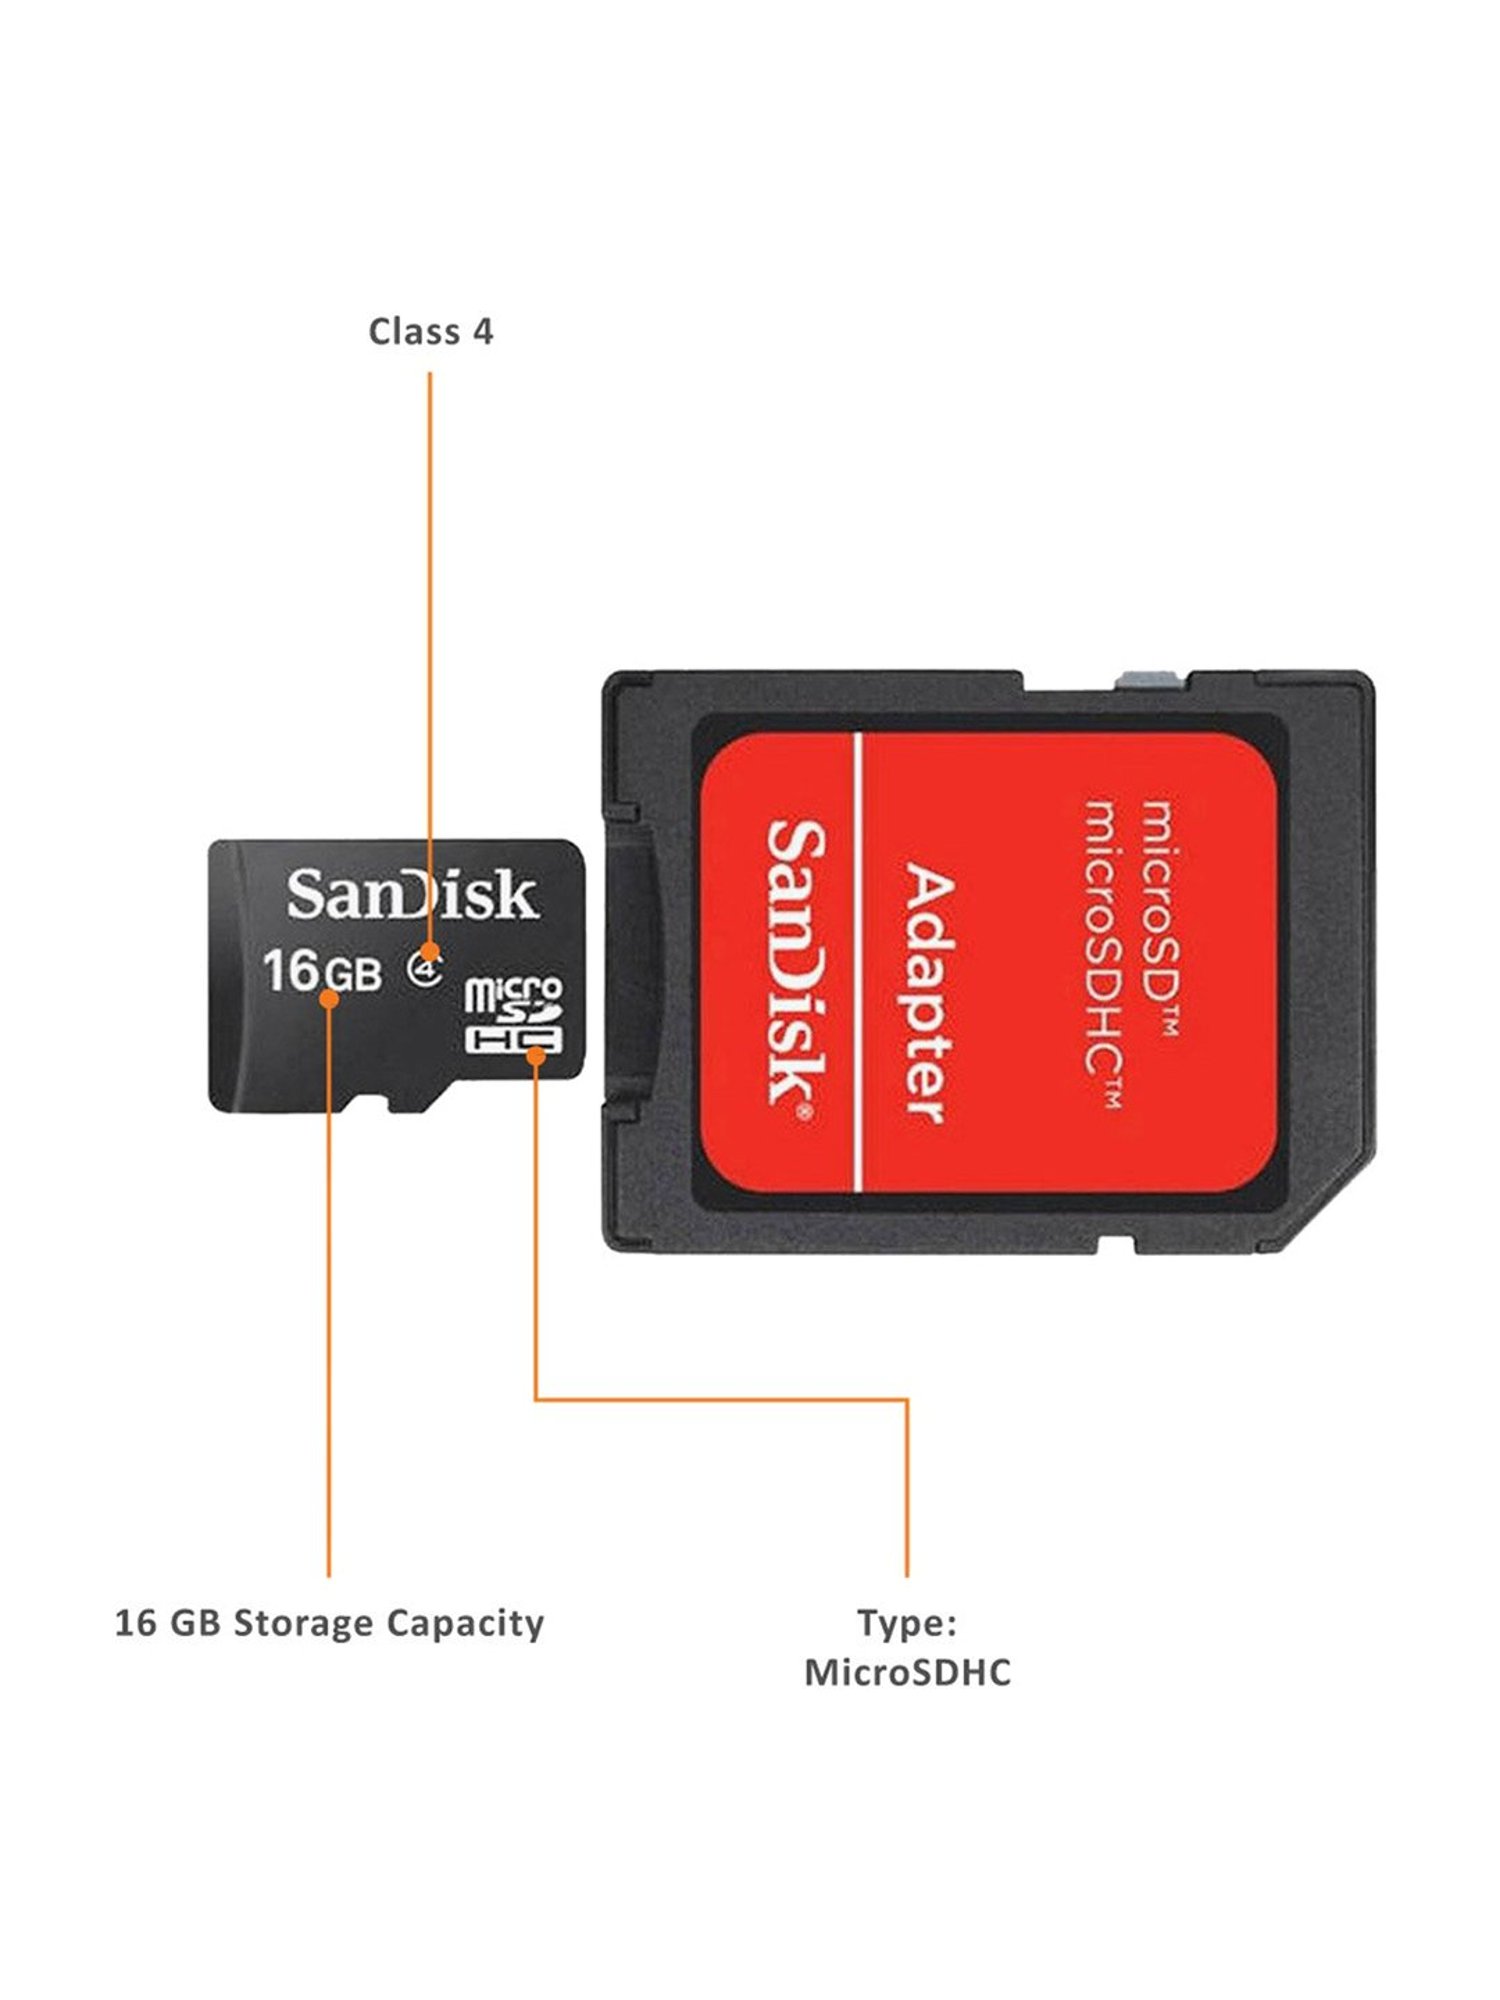 SANDISK SDSDQM-016G-B35 Memory Card Black at TATAUnistore